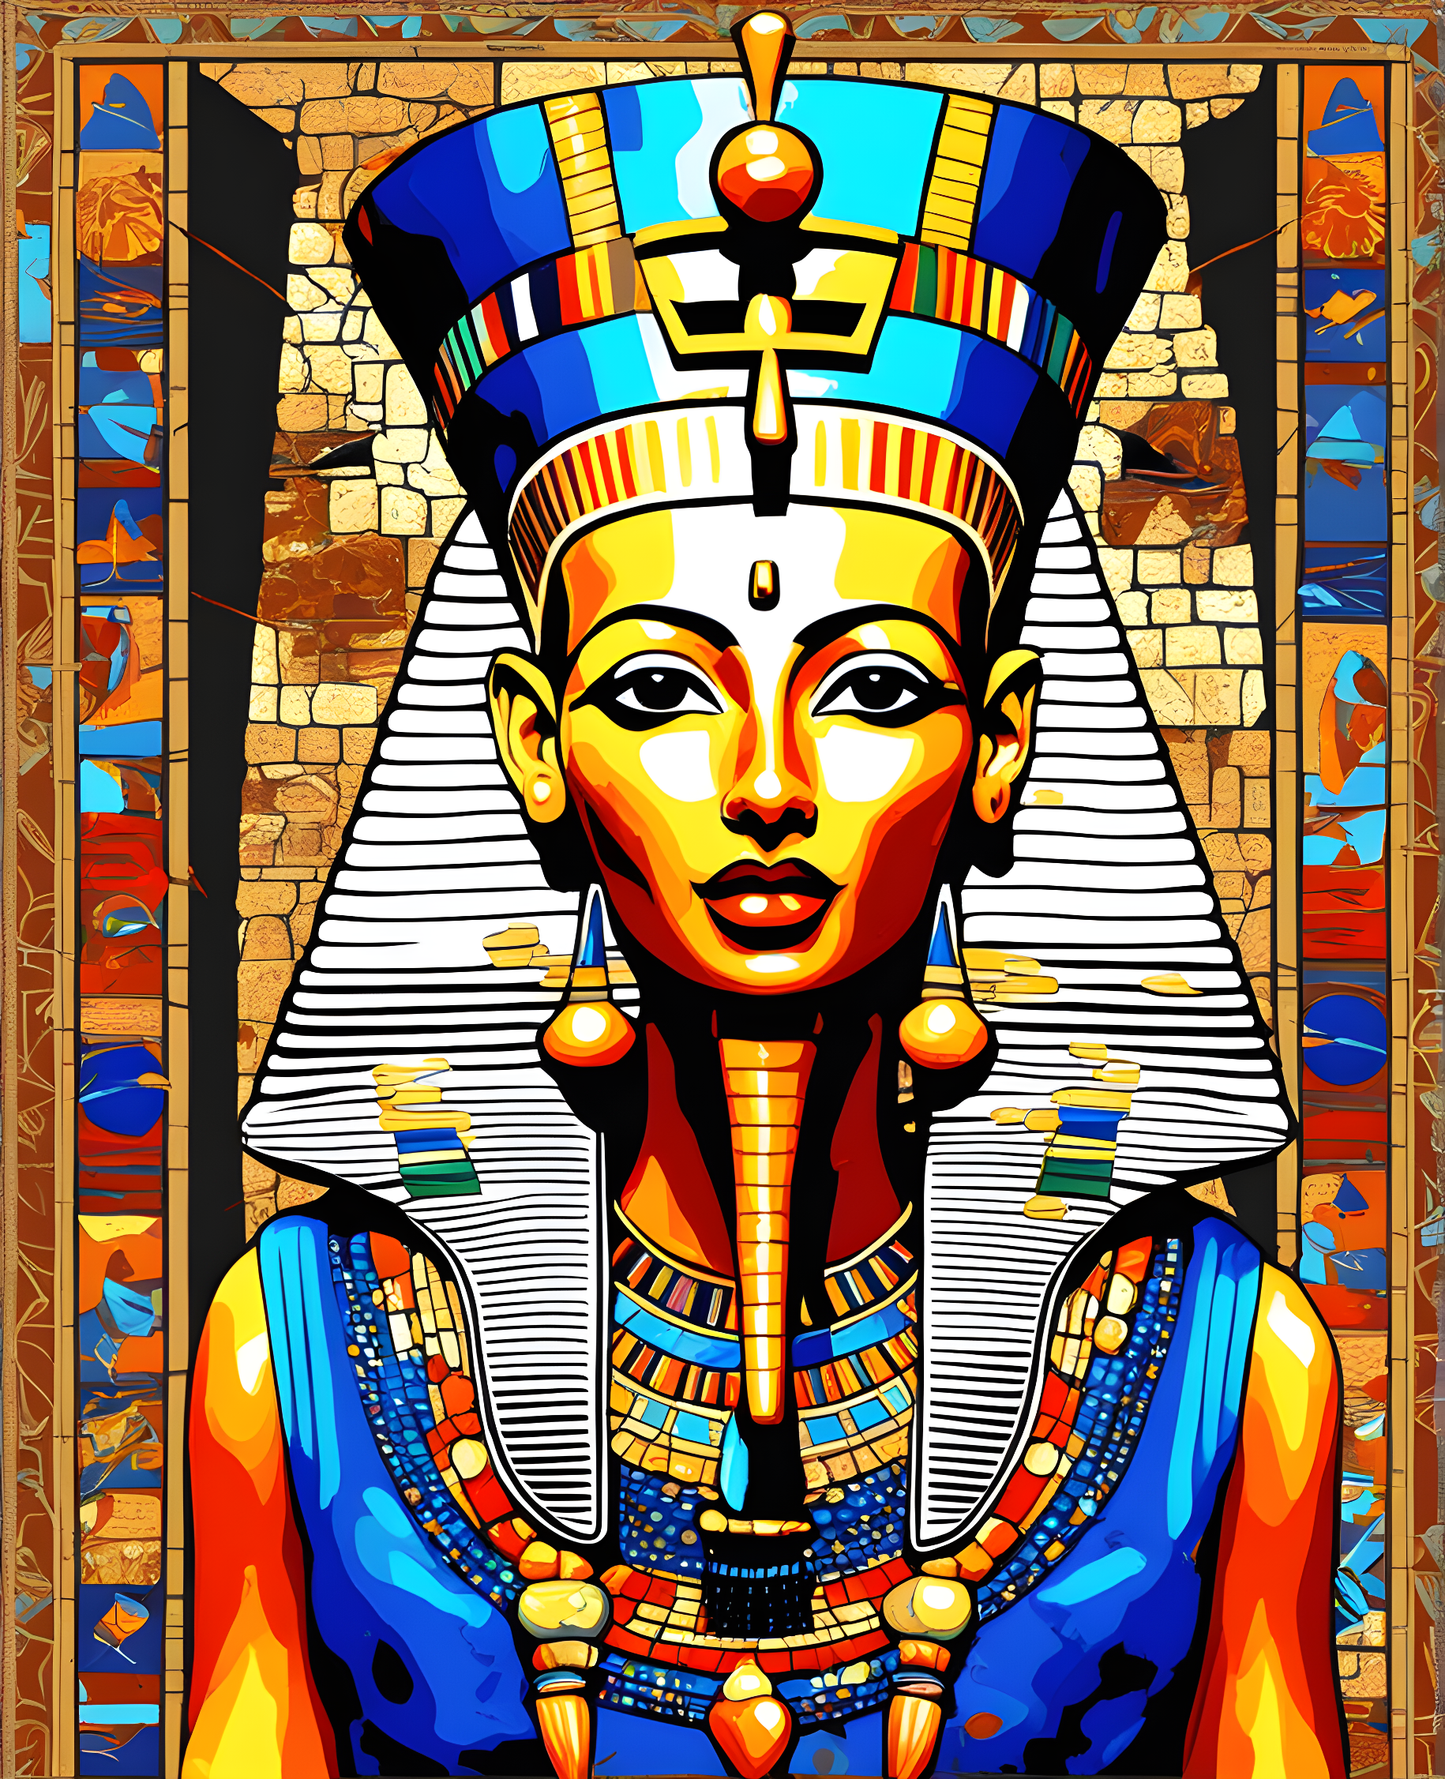 Nefertiti (6) - Van-Go Paint-By-Number Kit